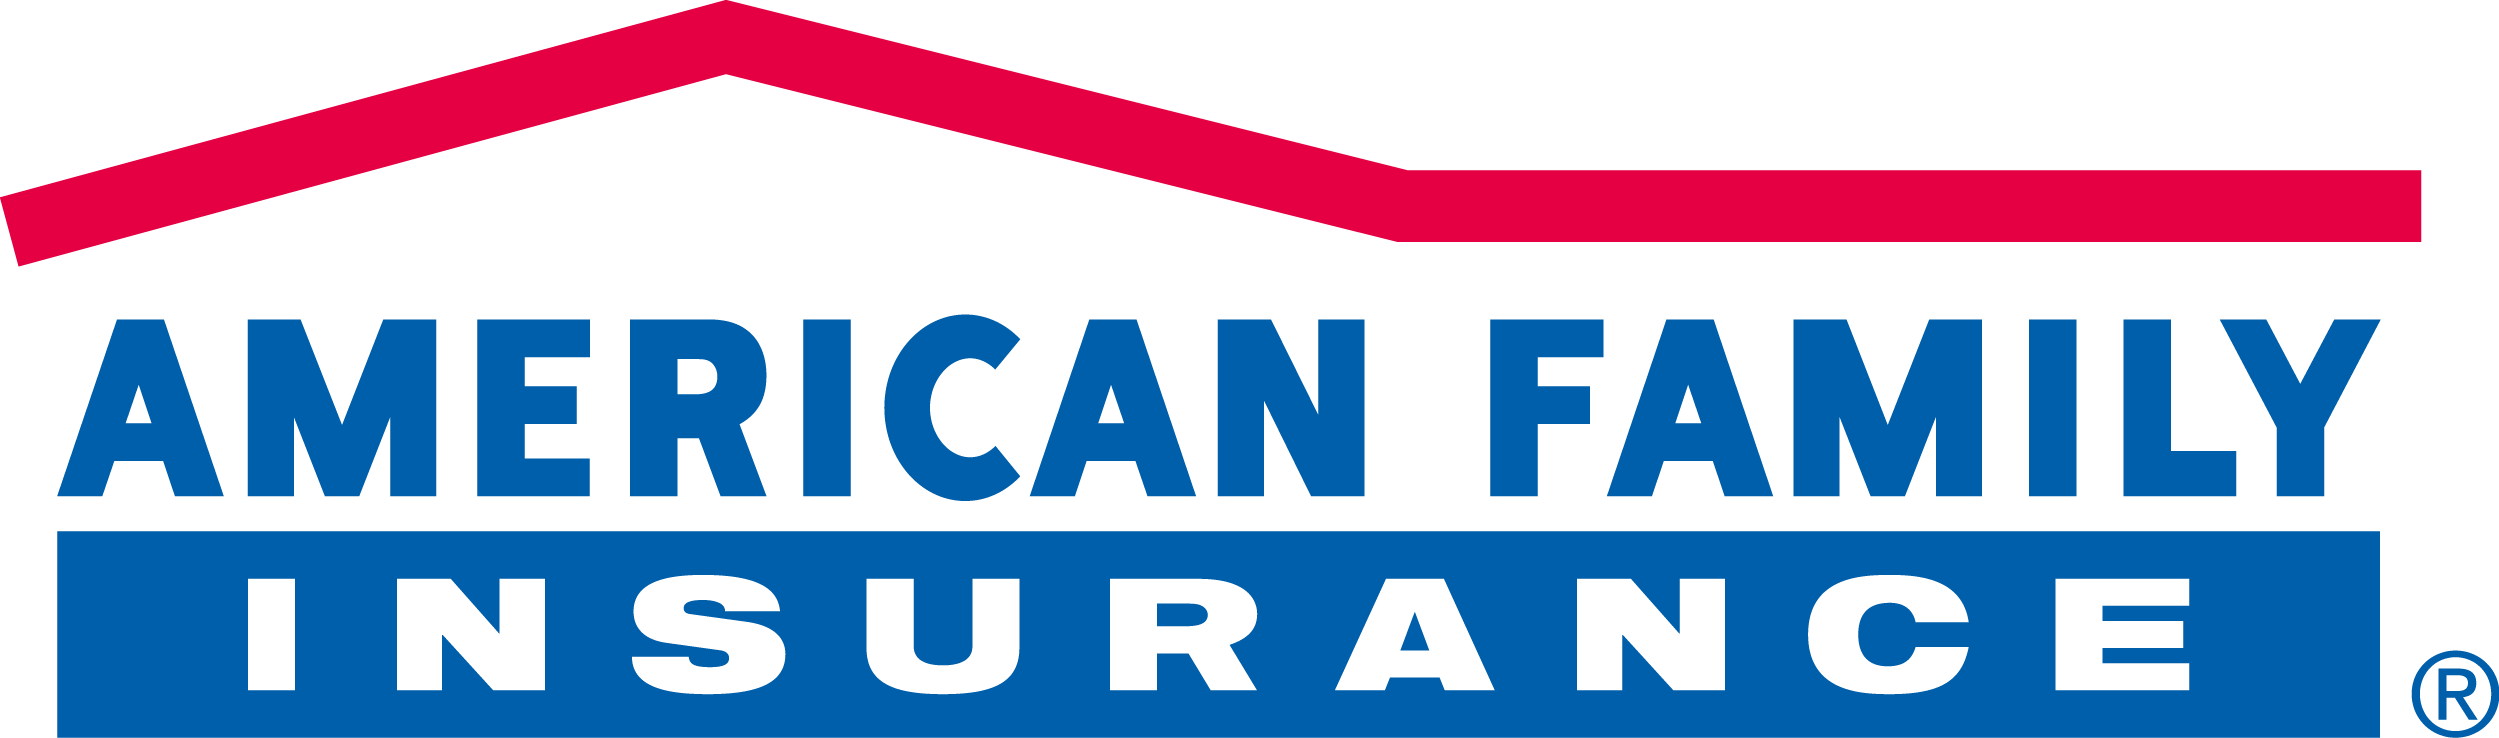 American Family Insurance Logo [amfam.com]